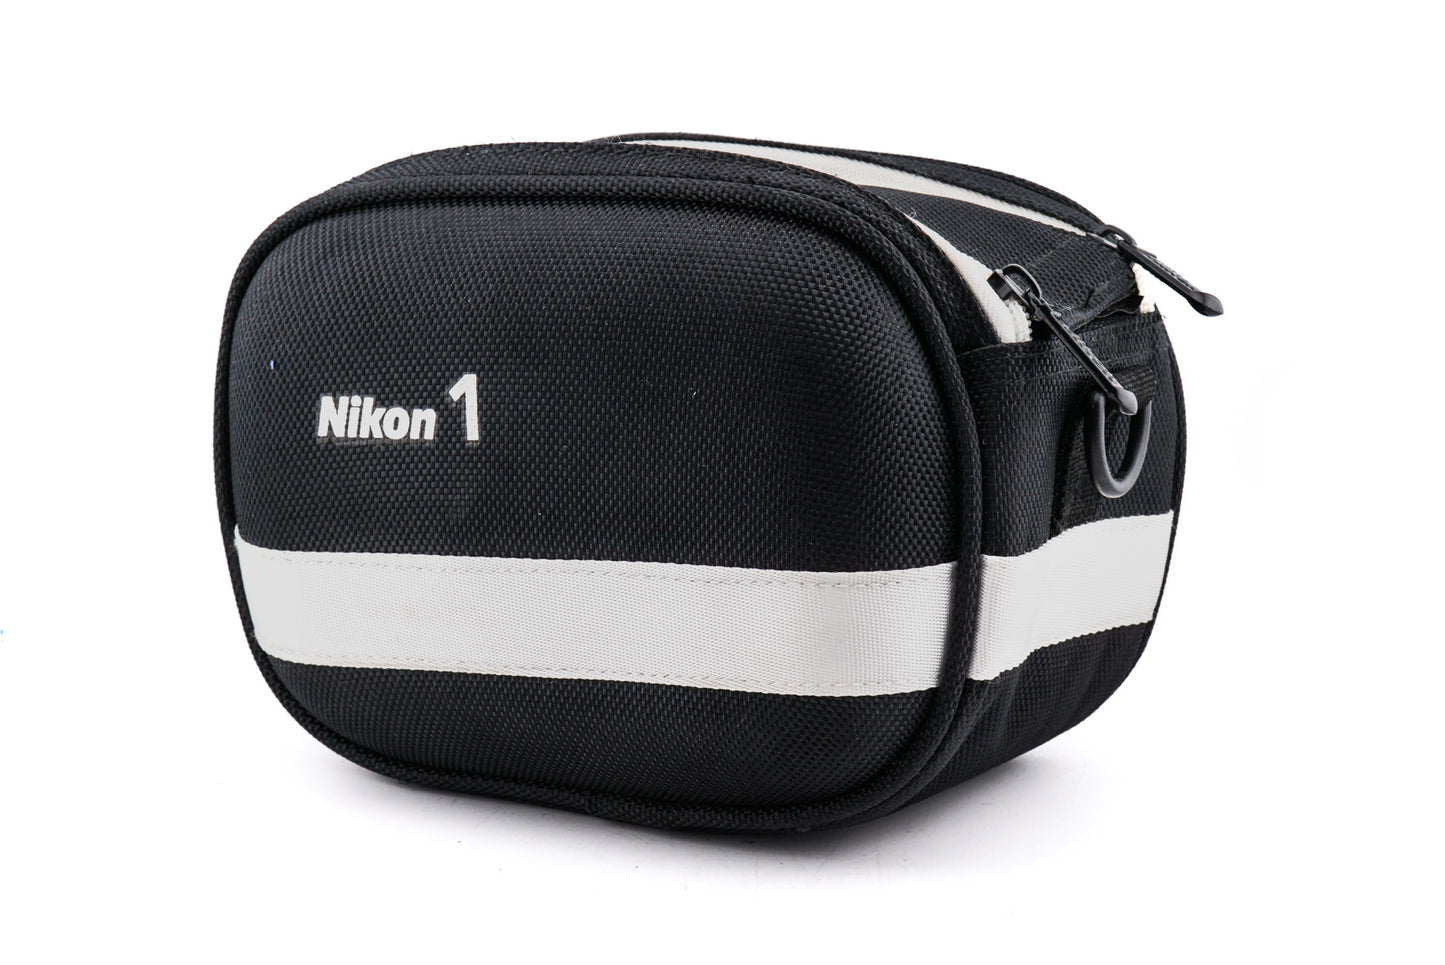 Nikon 1 Bag - Accessory